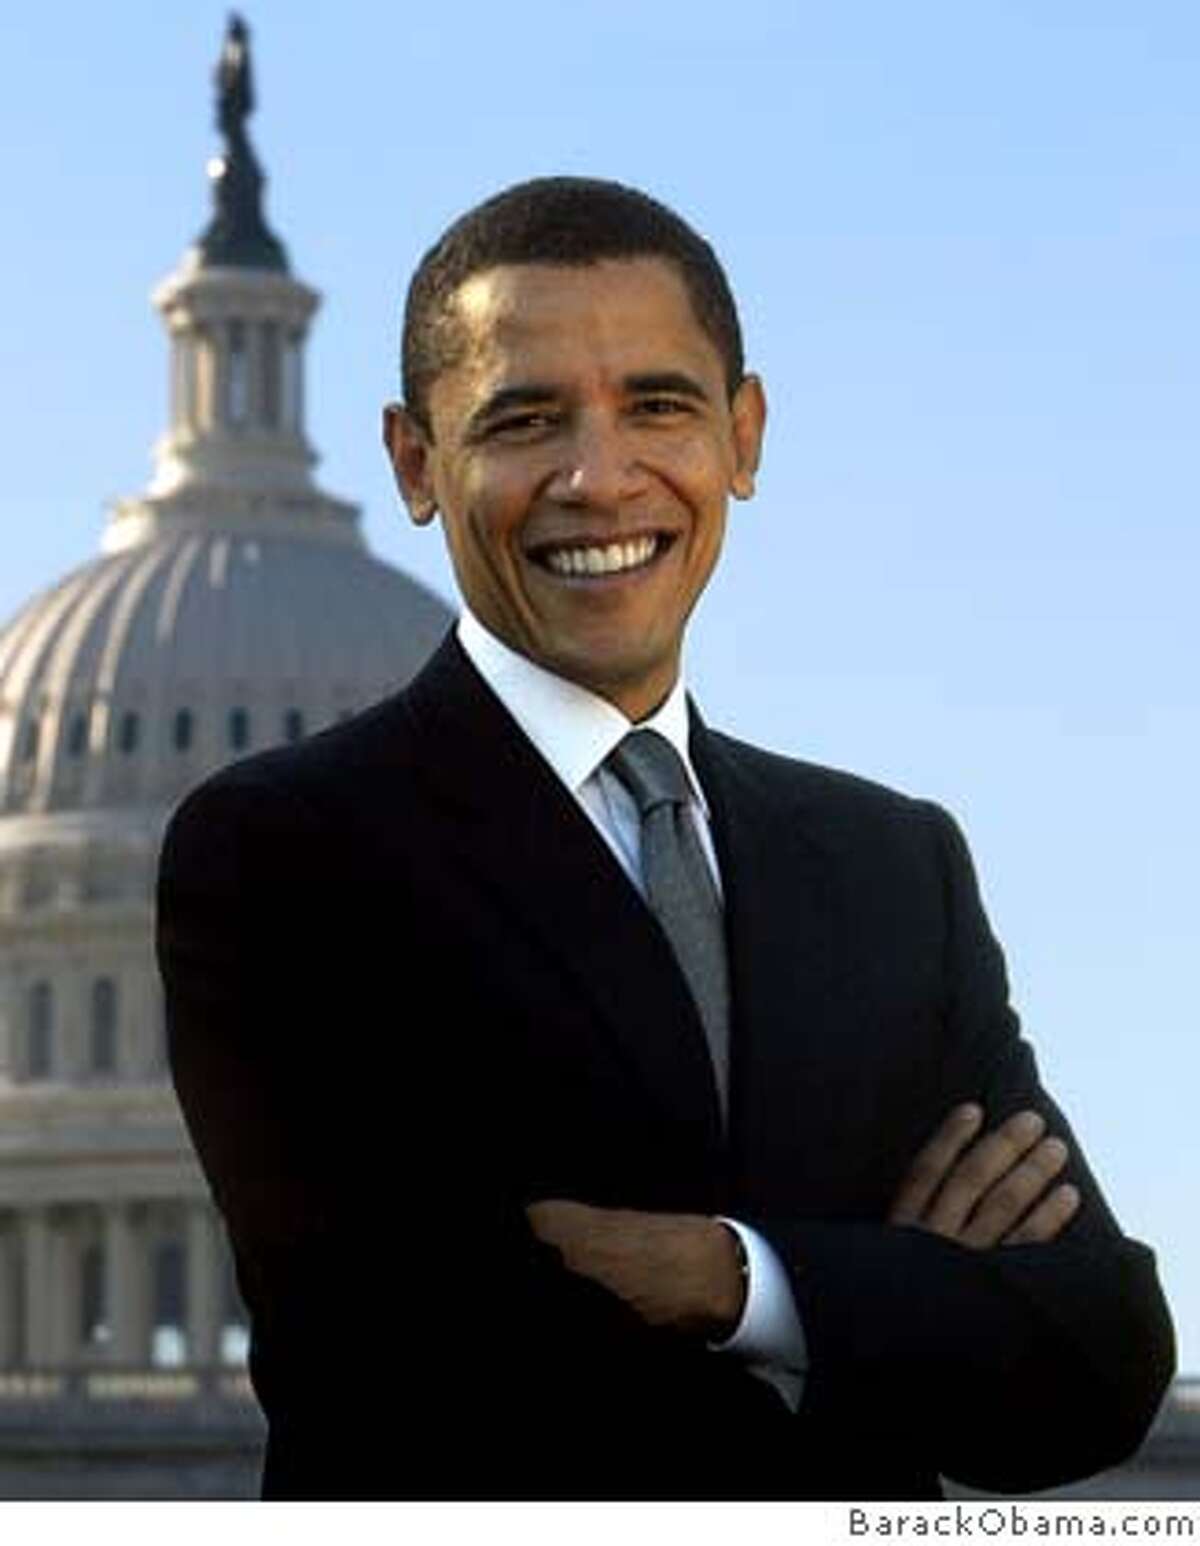 Democratic presidential candidate Barack Obama. Photo by BarackObama.com